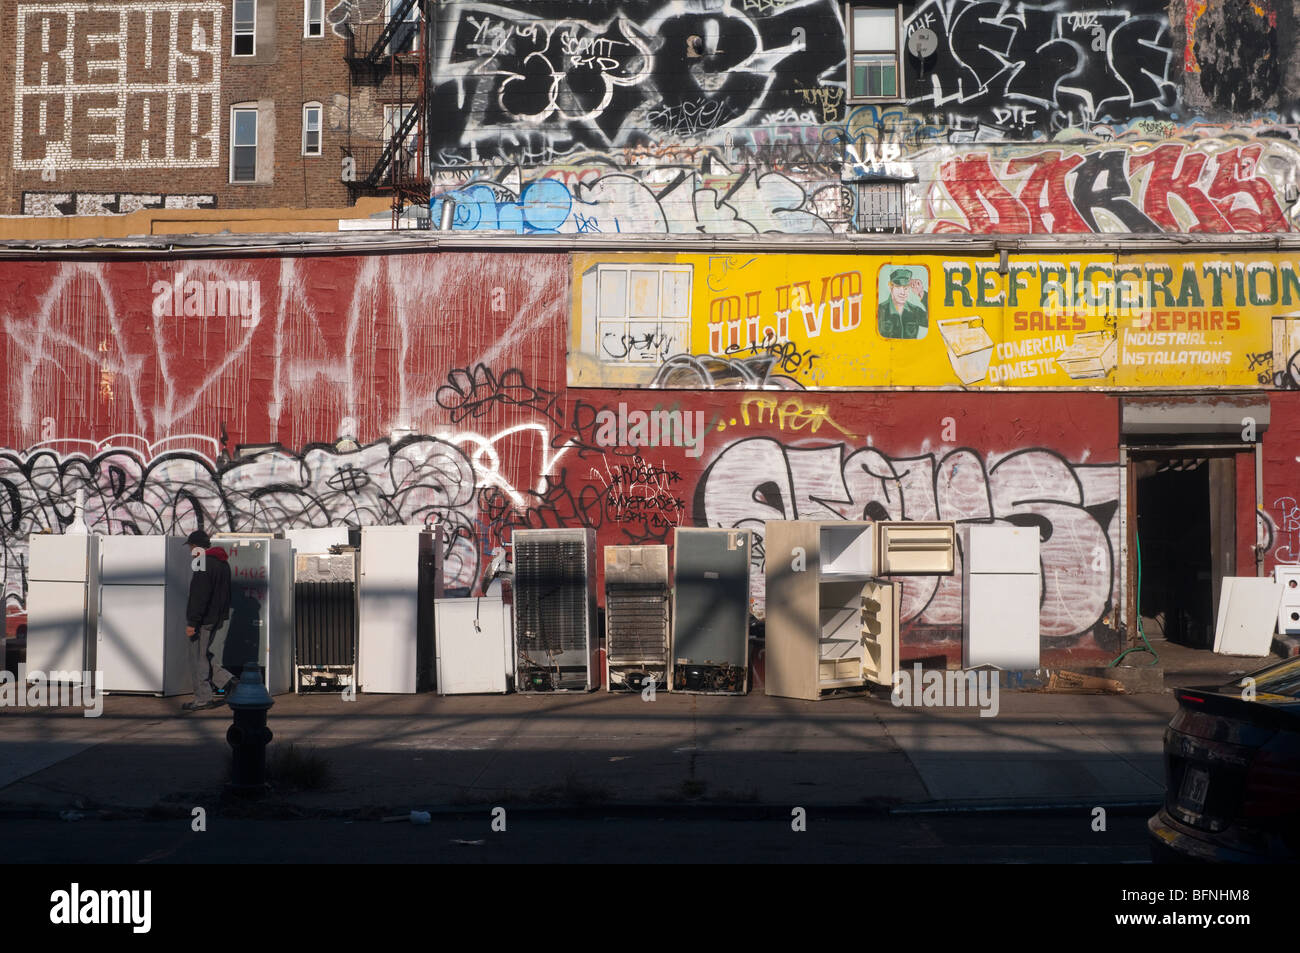 Brooklyn, NY 18 November 2009 - Used Refrigerators and Graffiti on South 5th Street in Williamsburg Stock Photo